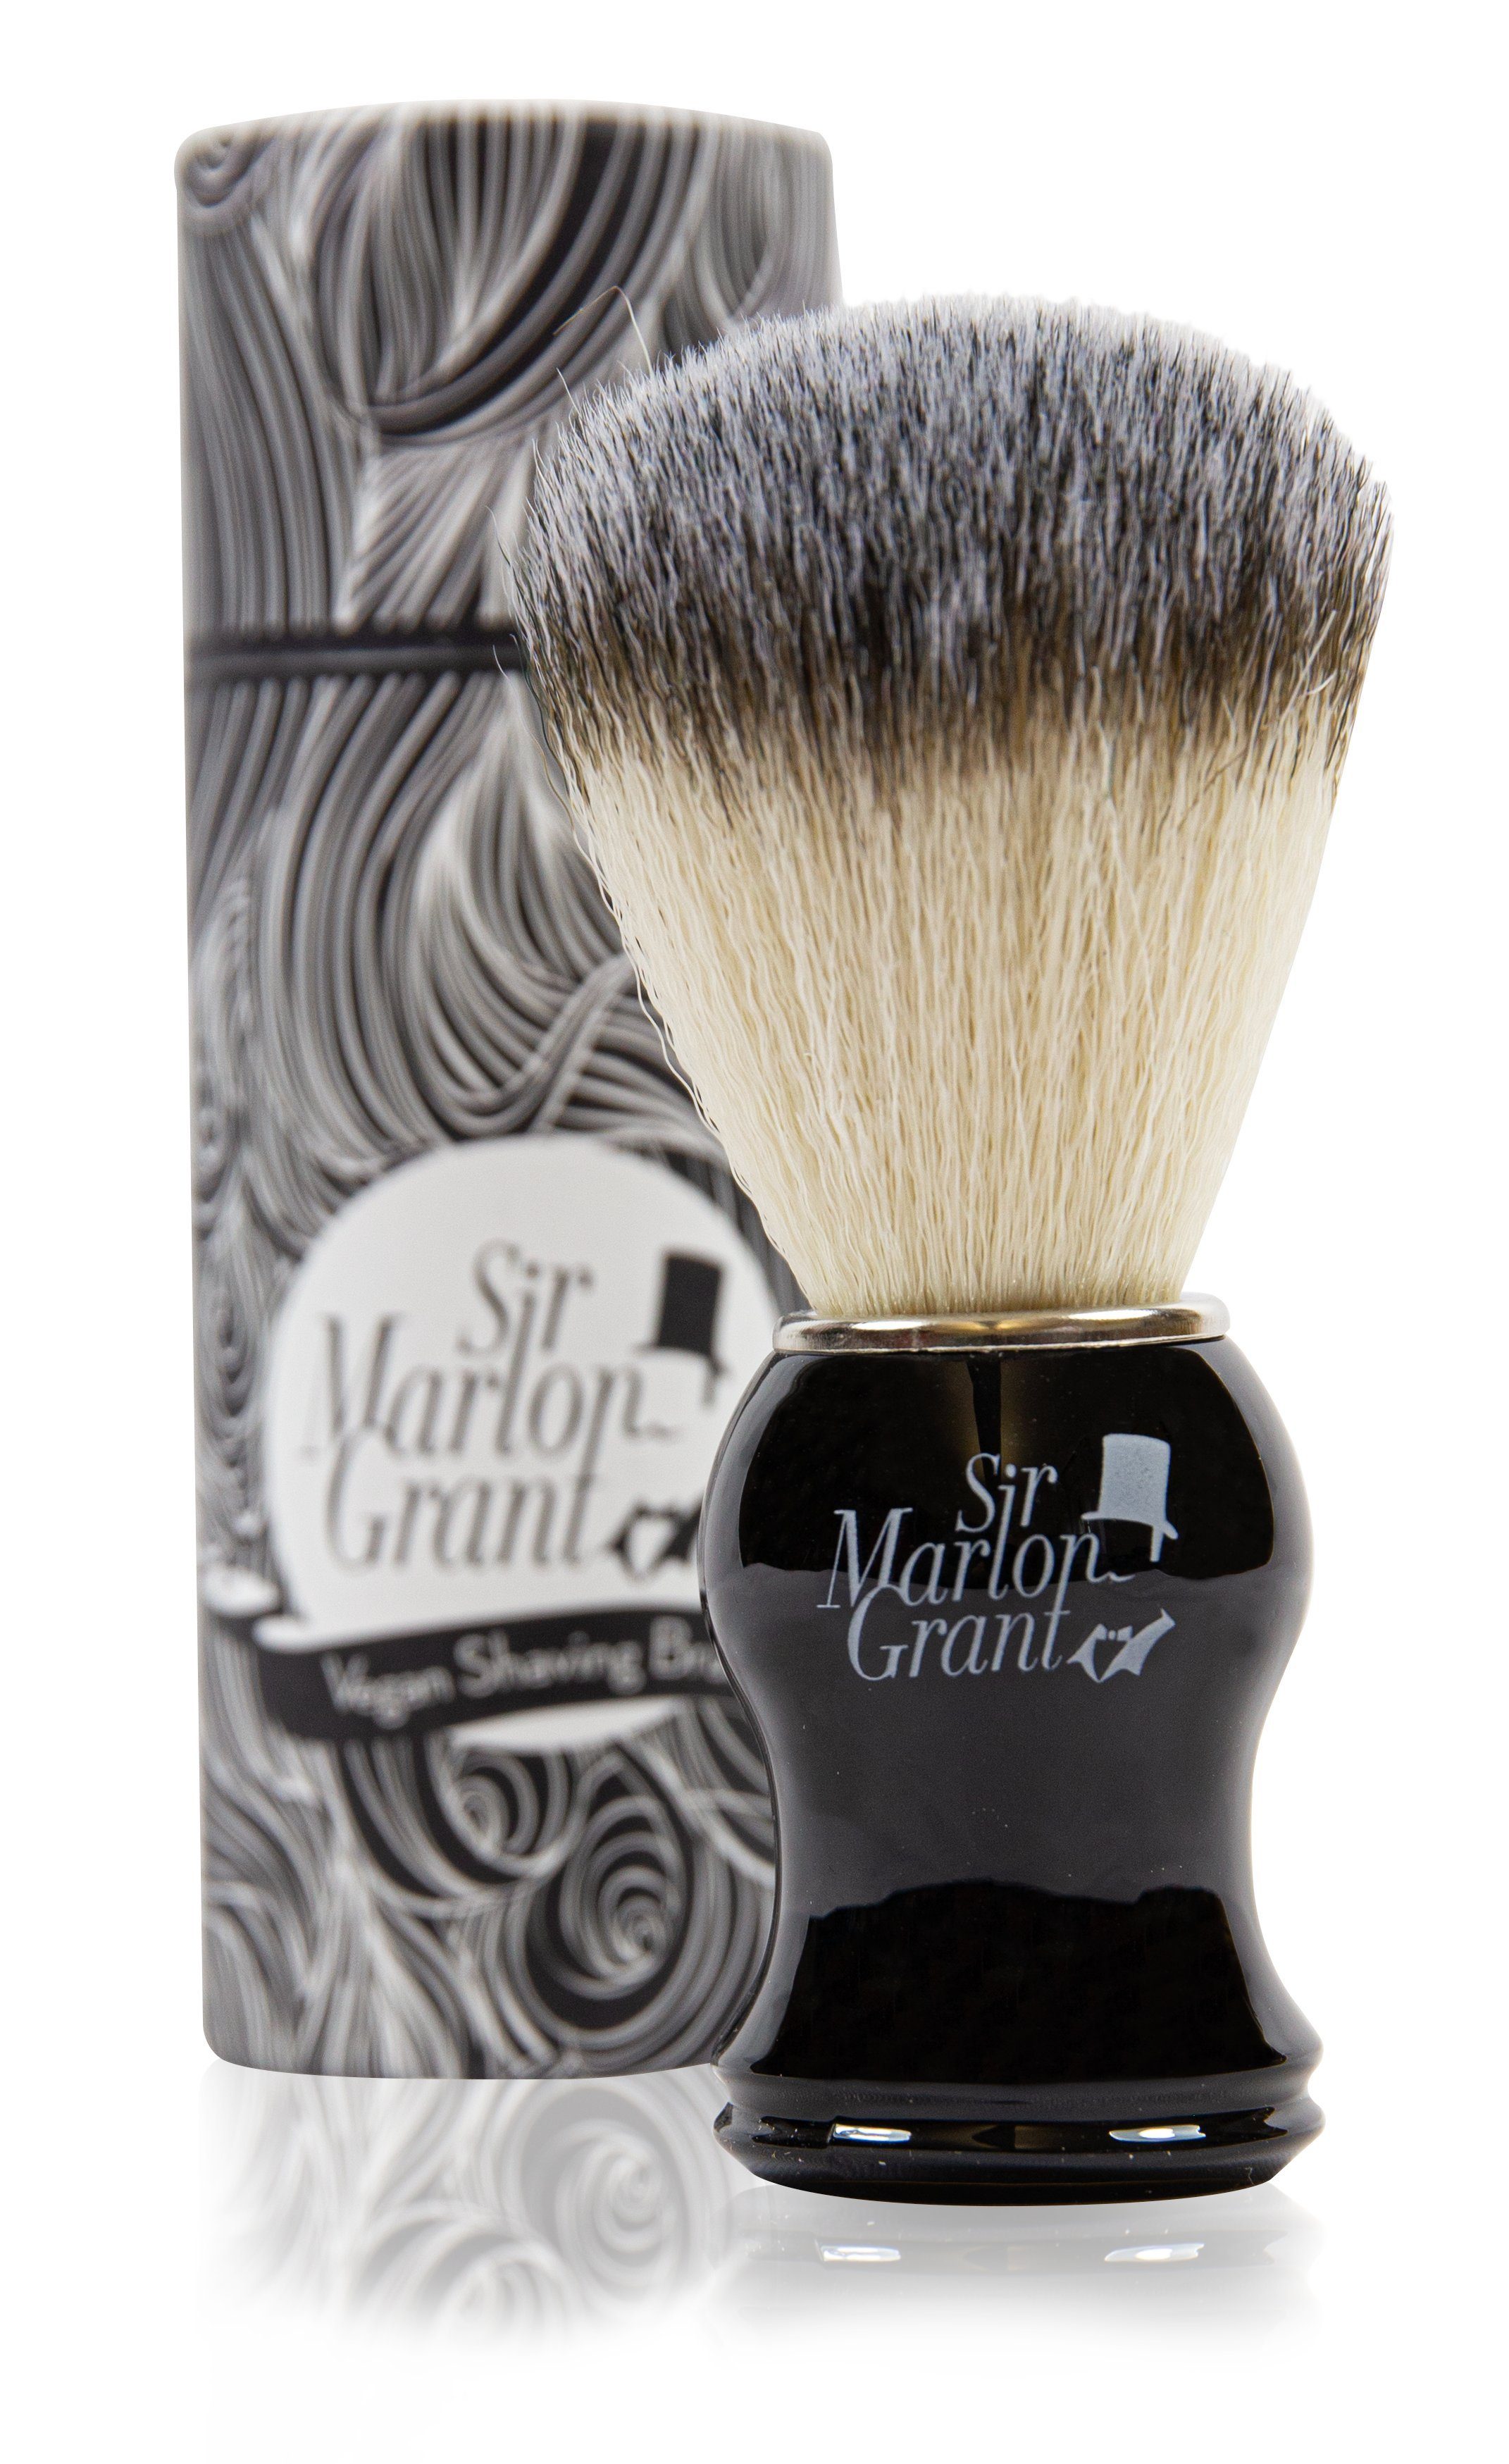 Sir Marlon Grant Rasierpinsel Premium Dachshaar weichem Vegan - Rasierpinsel Brush, aus Imitat Shaving